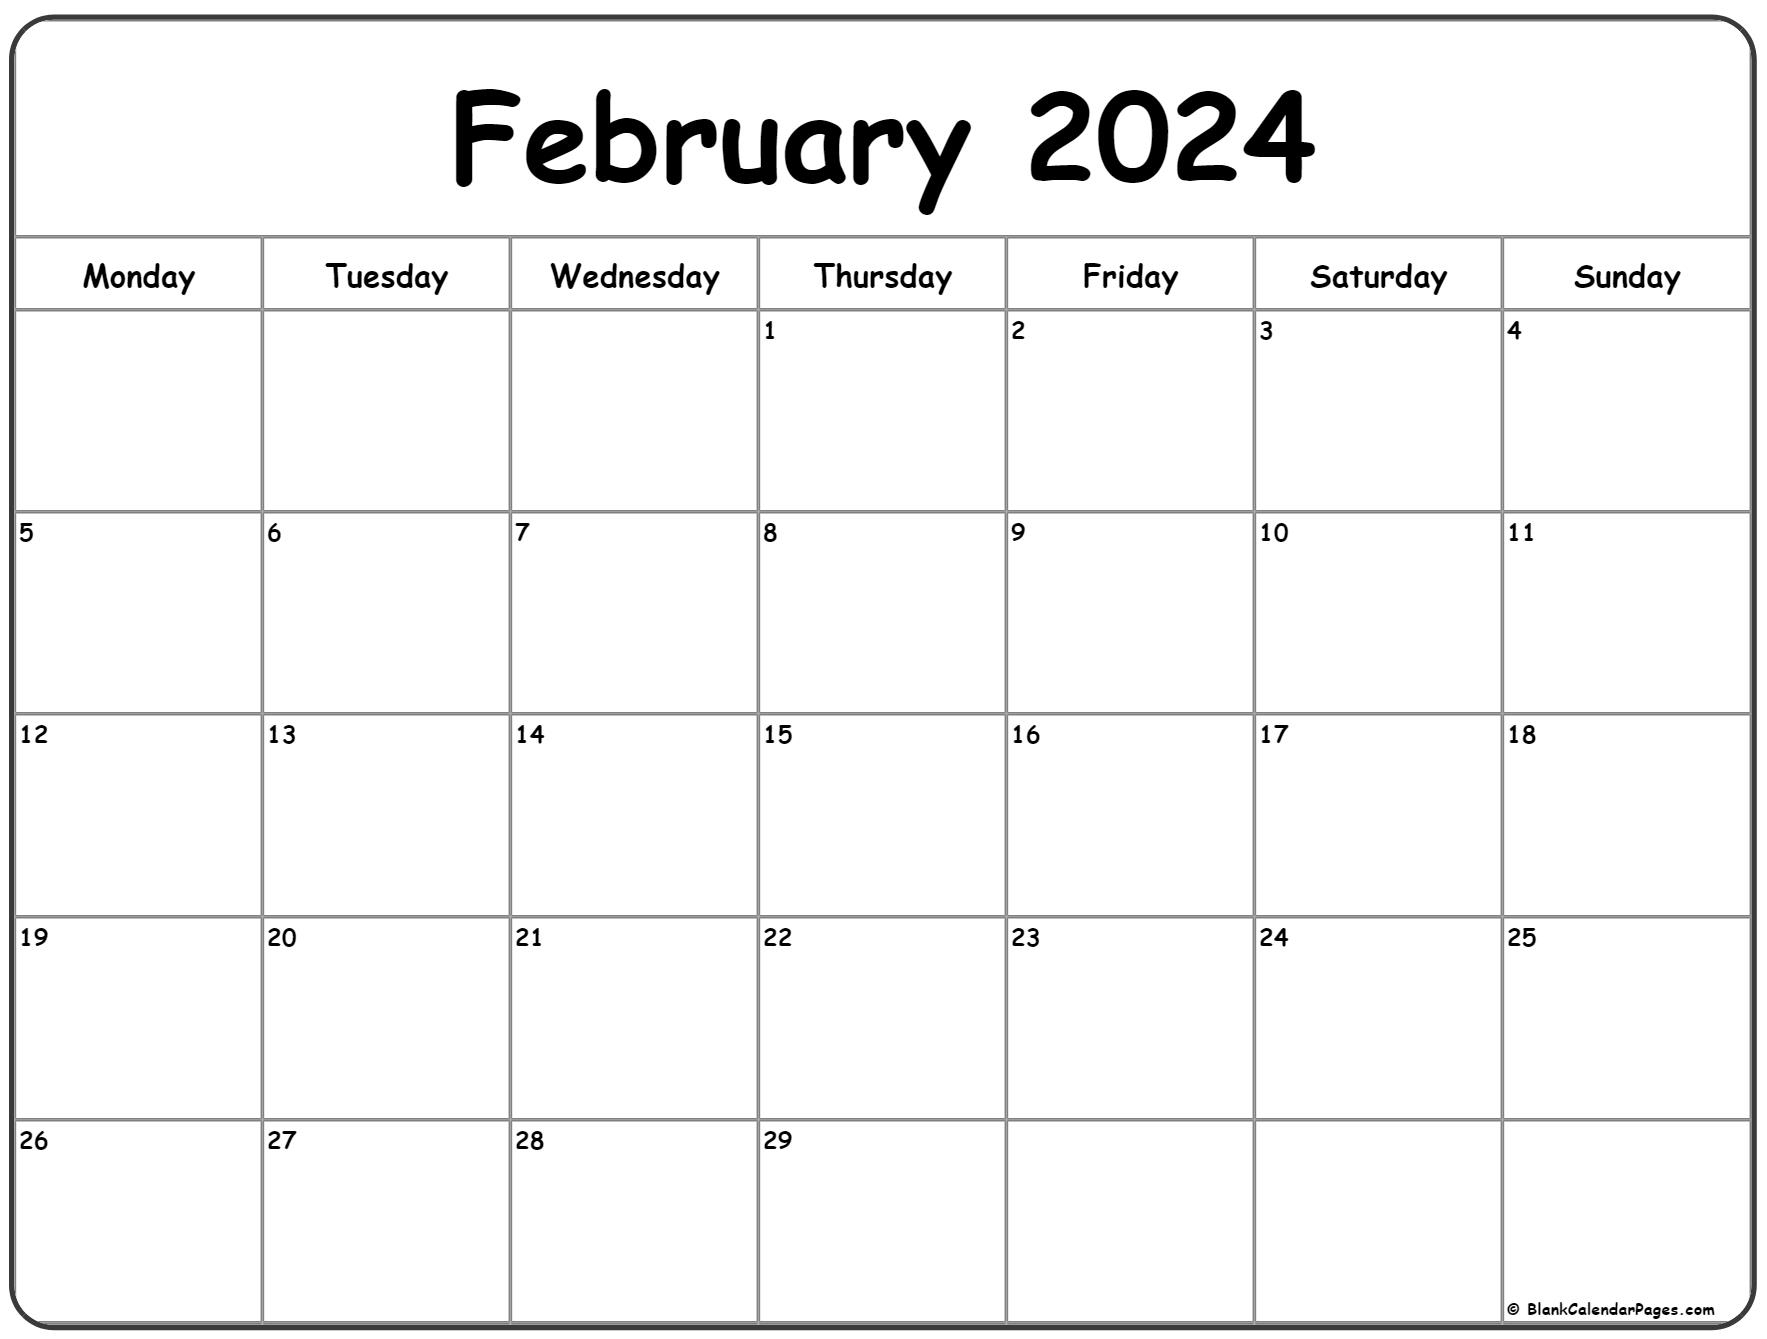 February 2024 Monday Calendar | Monday To Sunday for February 2024 Blank Printable Calendar